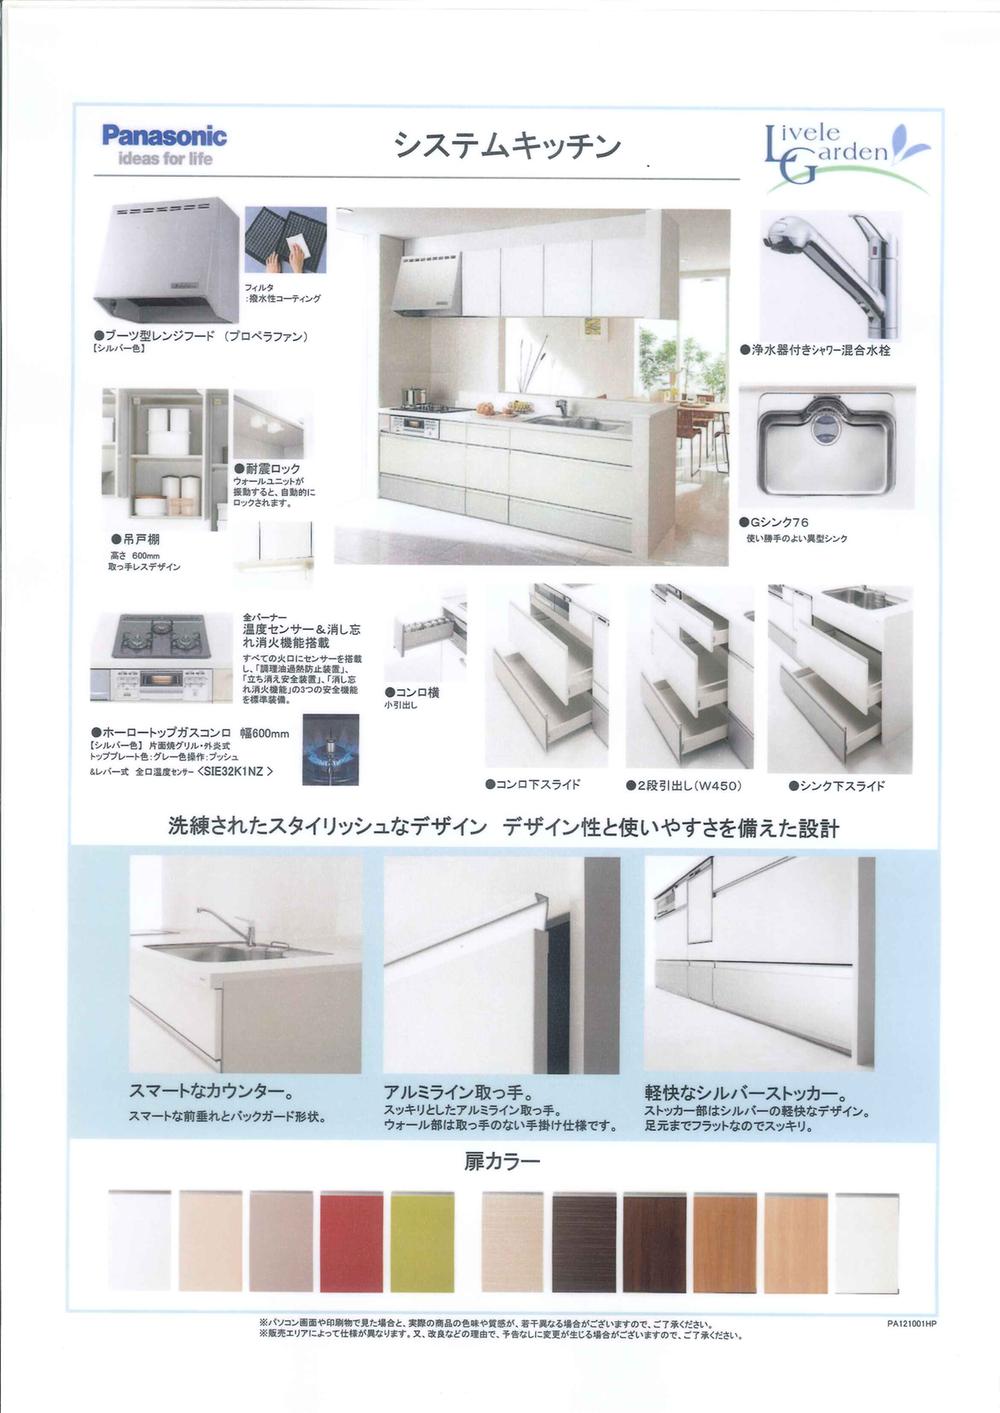 Kitchen. System kitchen (made by Panasonic)